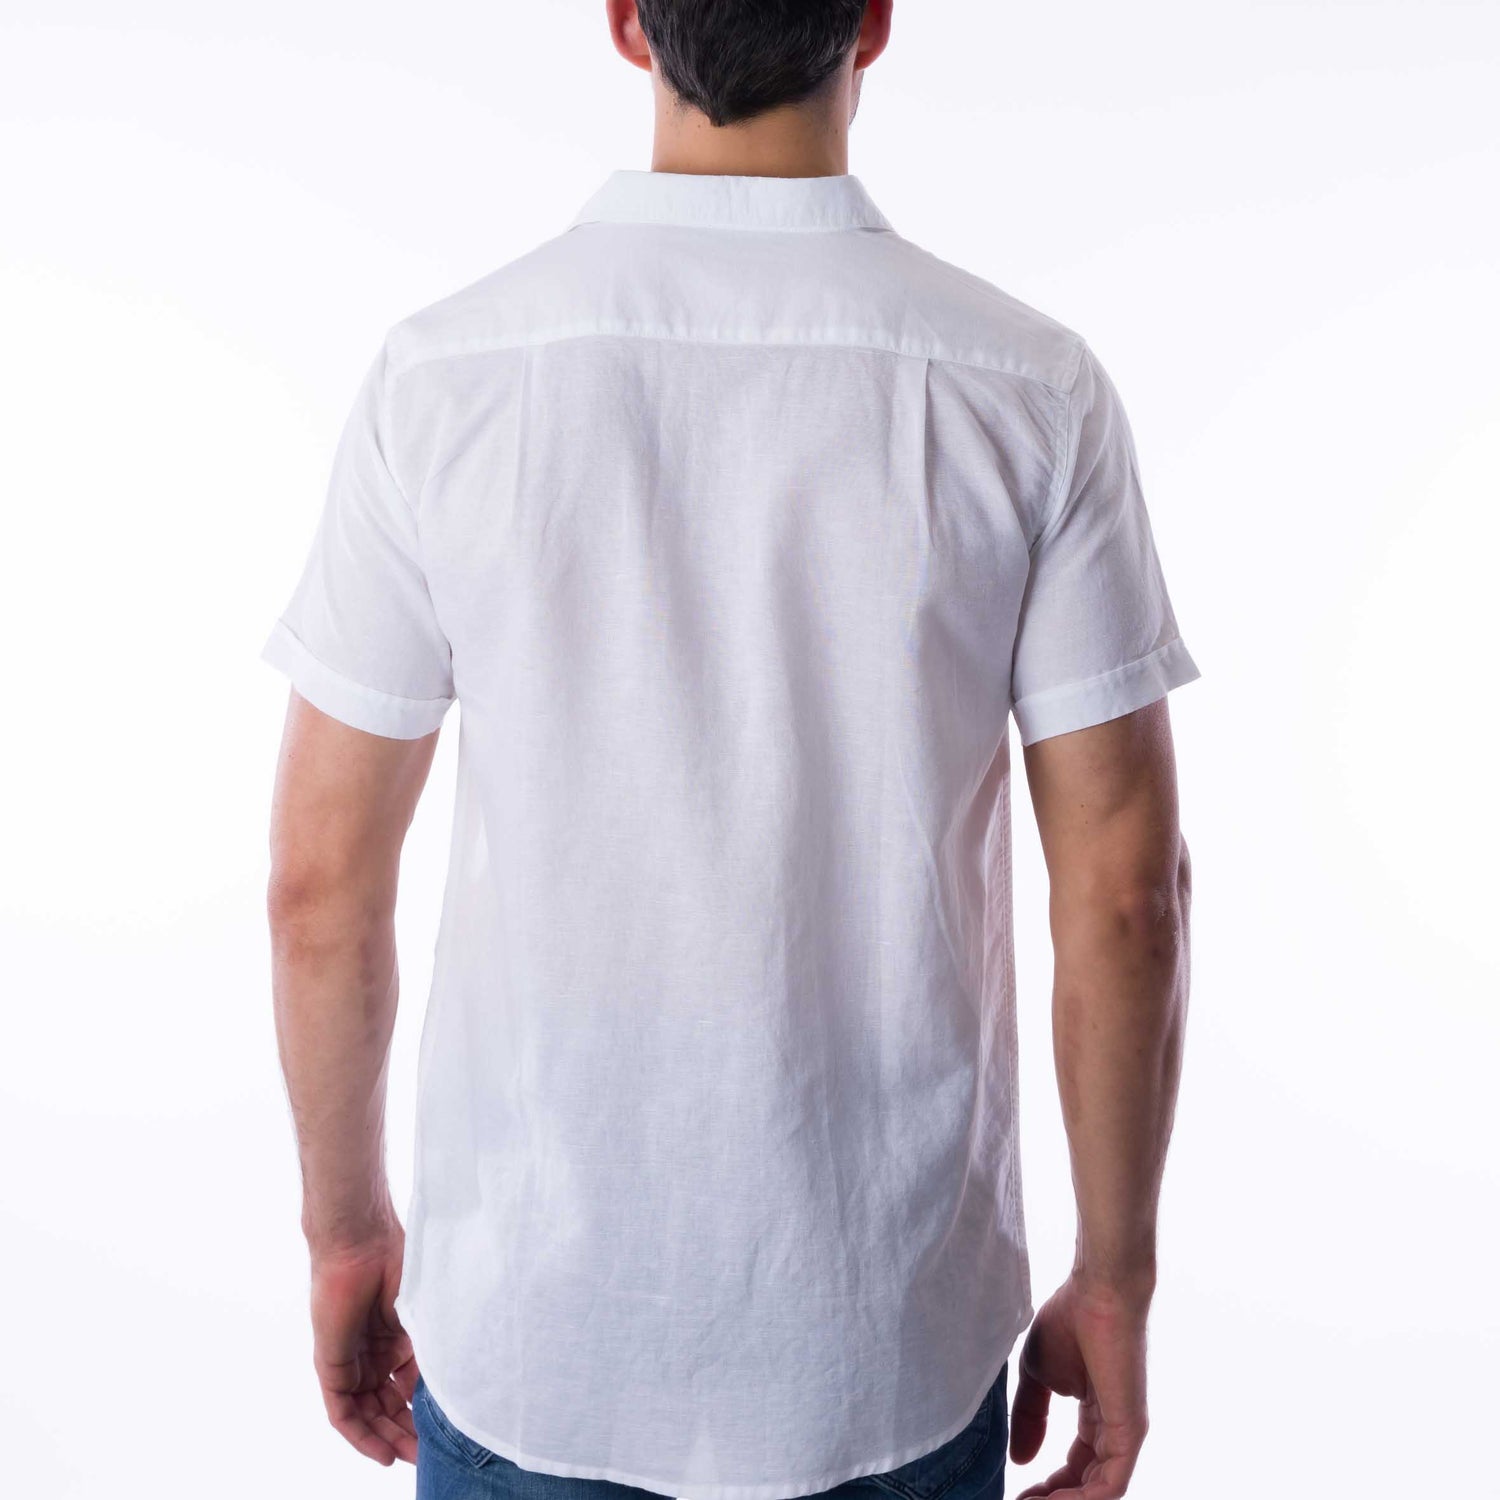 White Cotton and Linen Short Sleeve Shirt